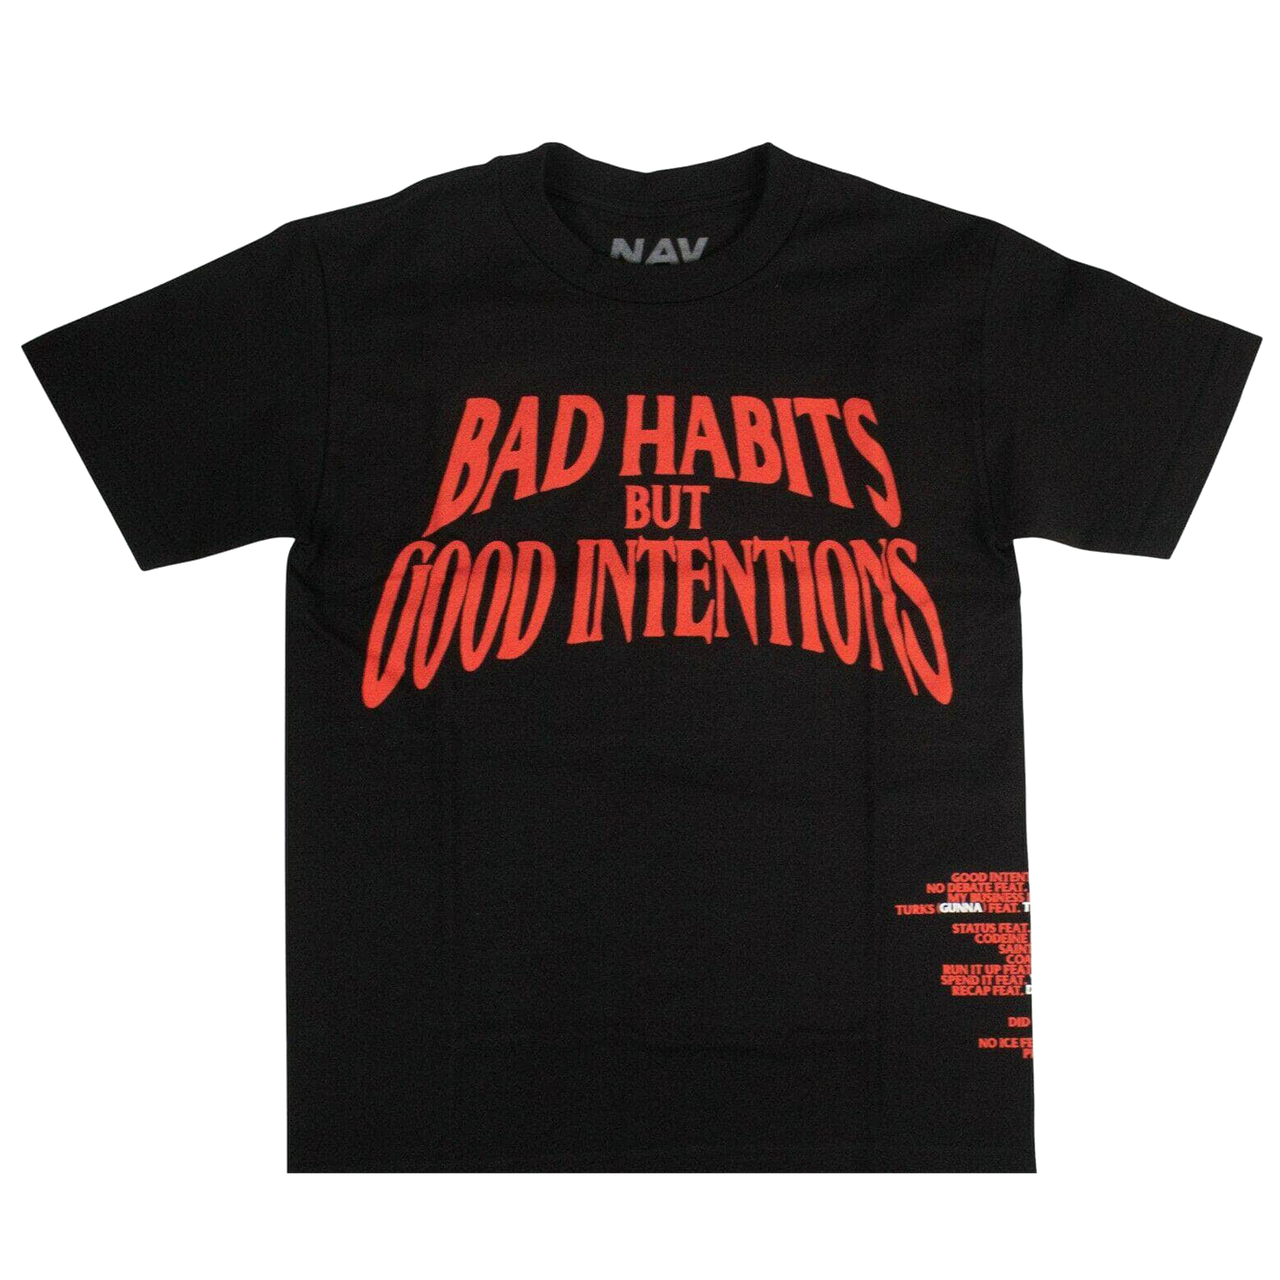 Vlone x Nav Bad Habits Good Intentions Tee Black